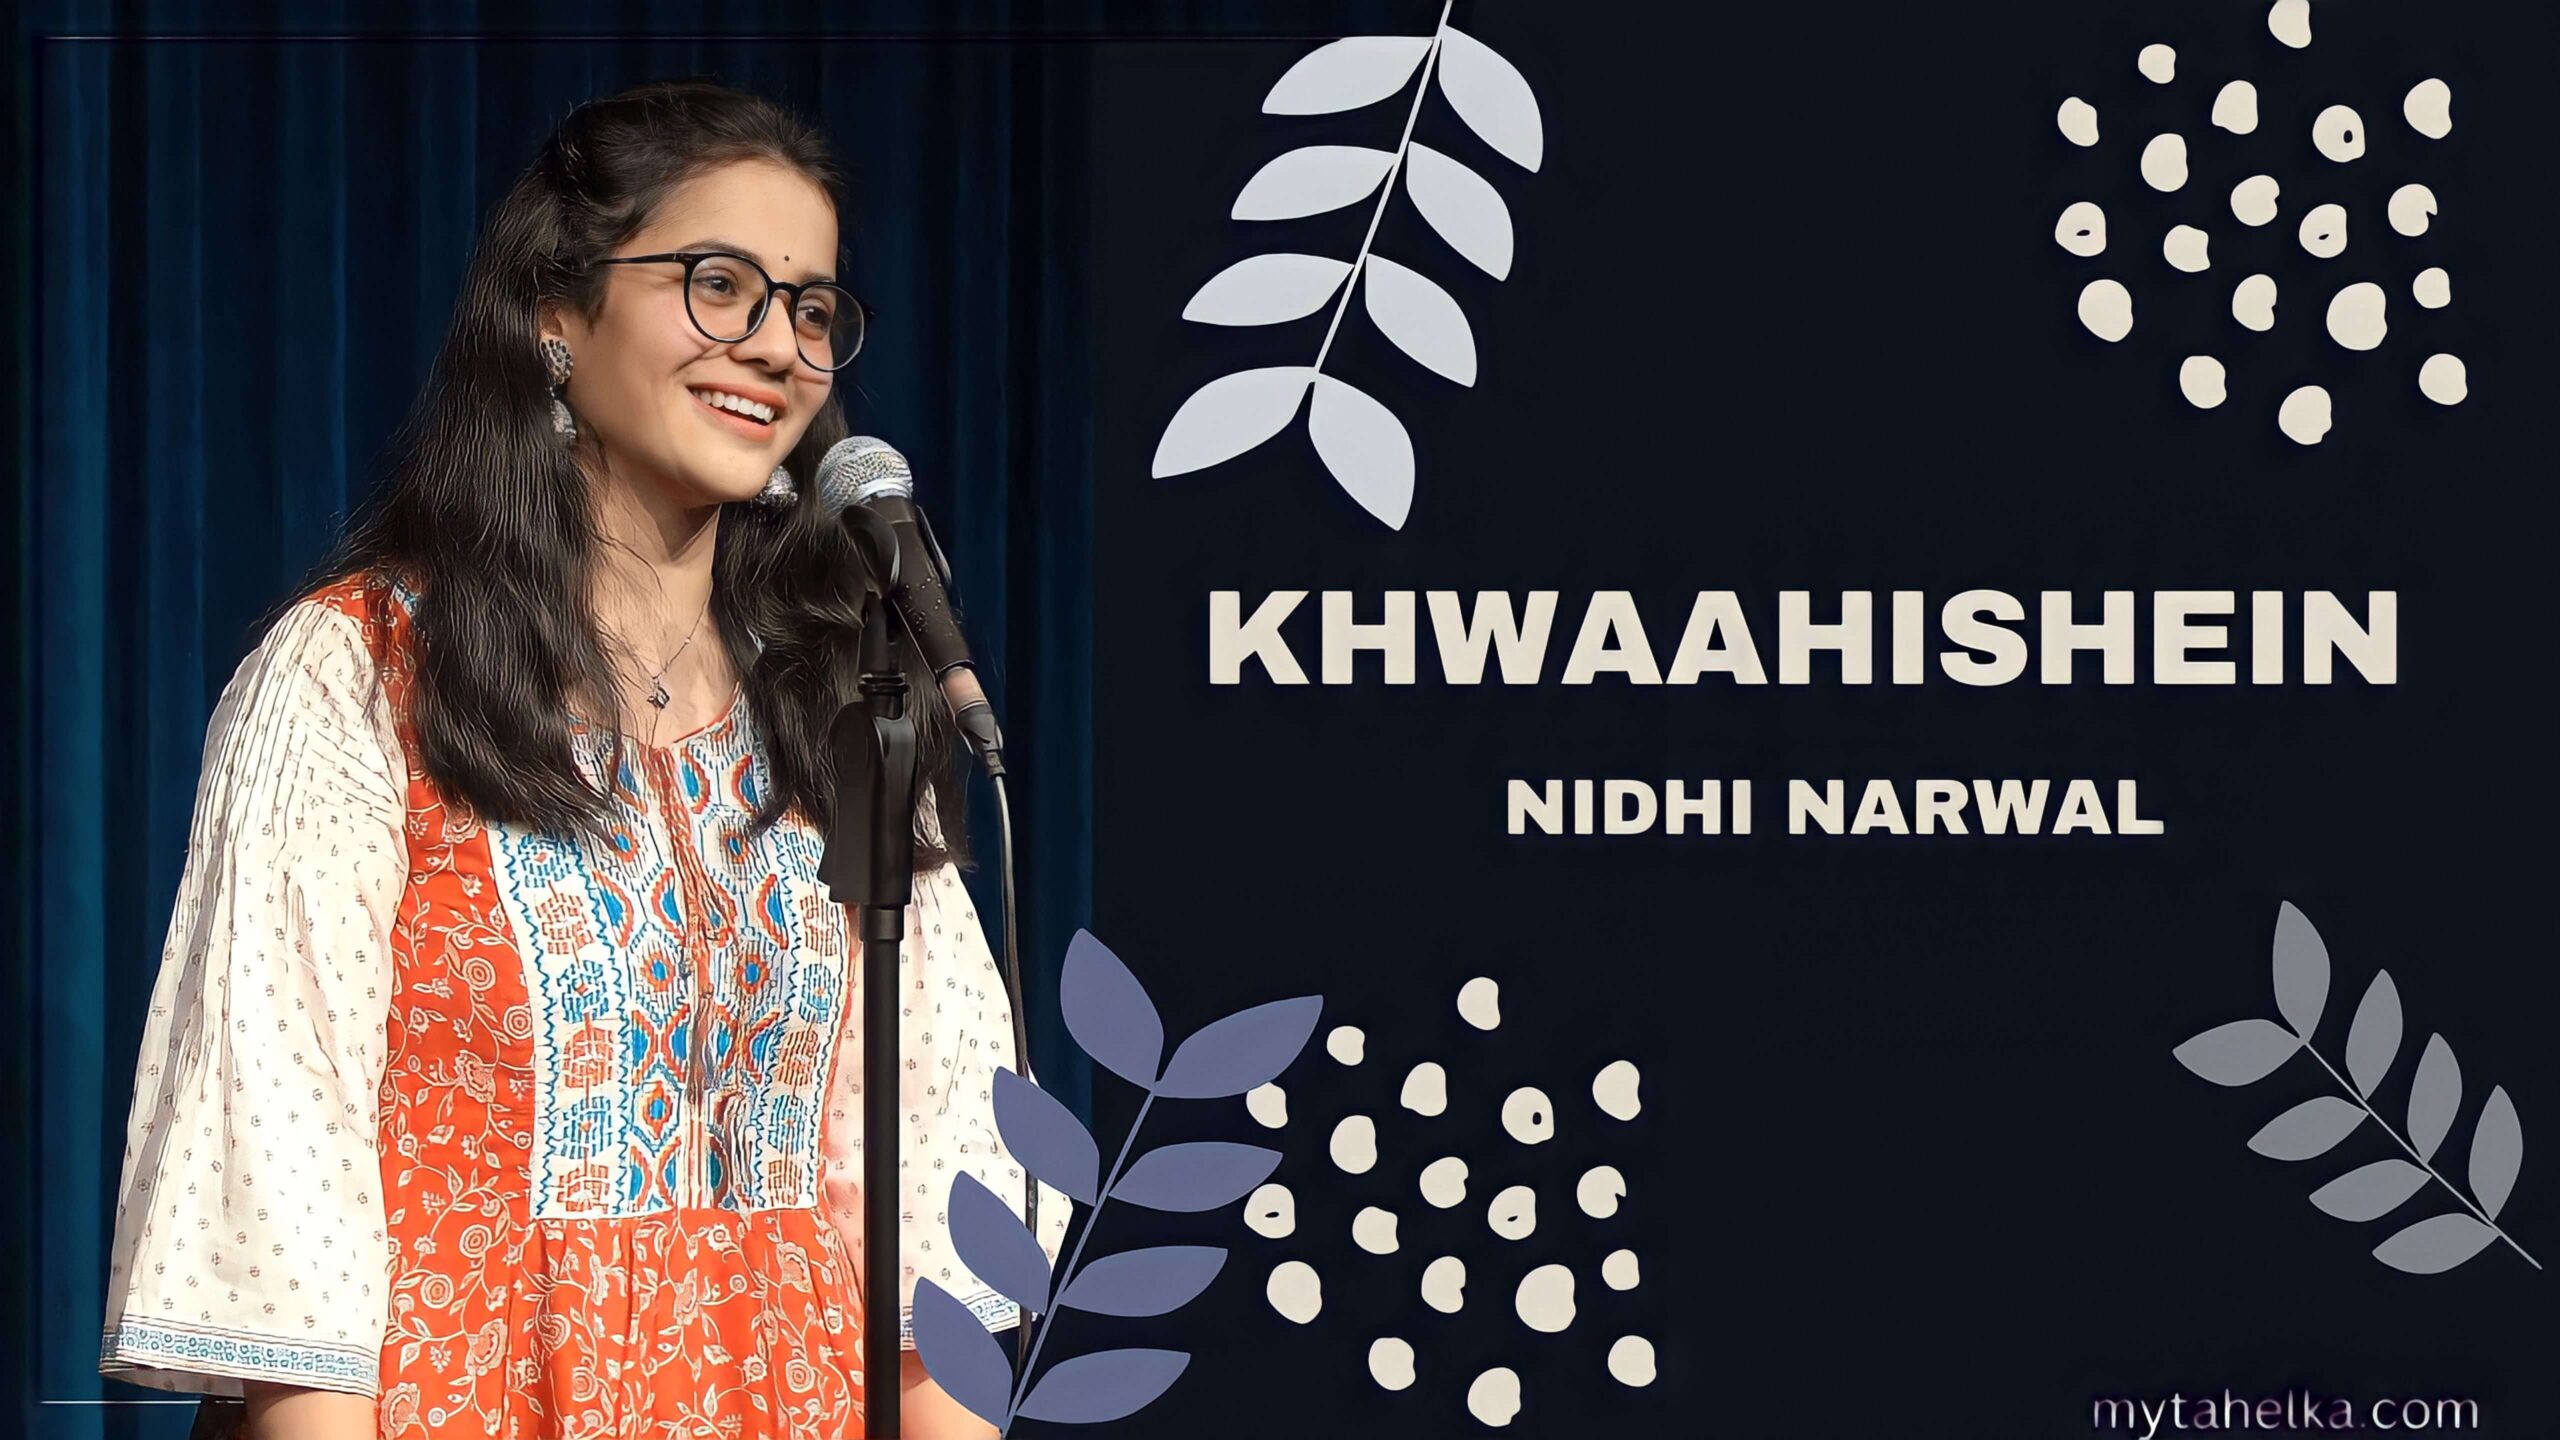 Khwaahishein Poetry Lyrics by Nidhi Narwal